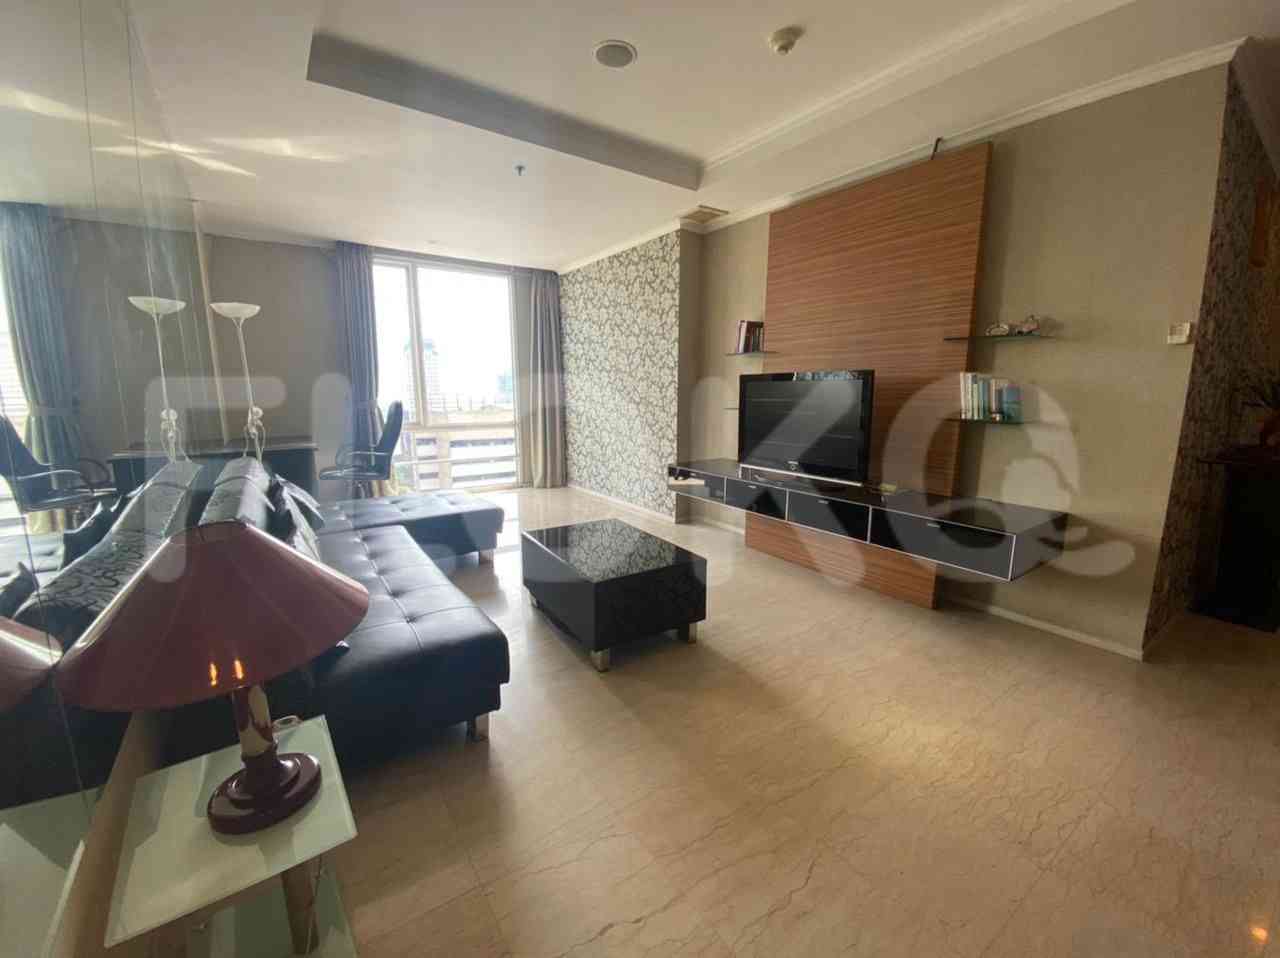 3 Bedroom on 26th Floor for Rent in FX Residence - fsu859 8